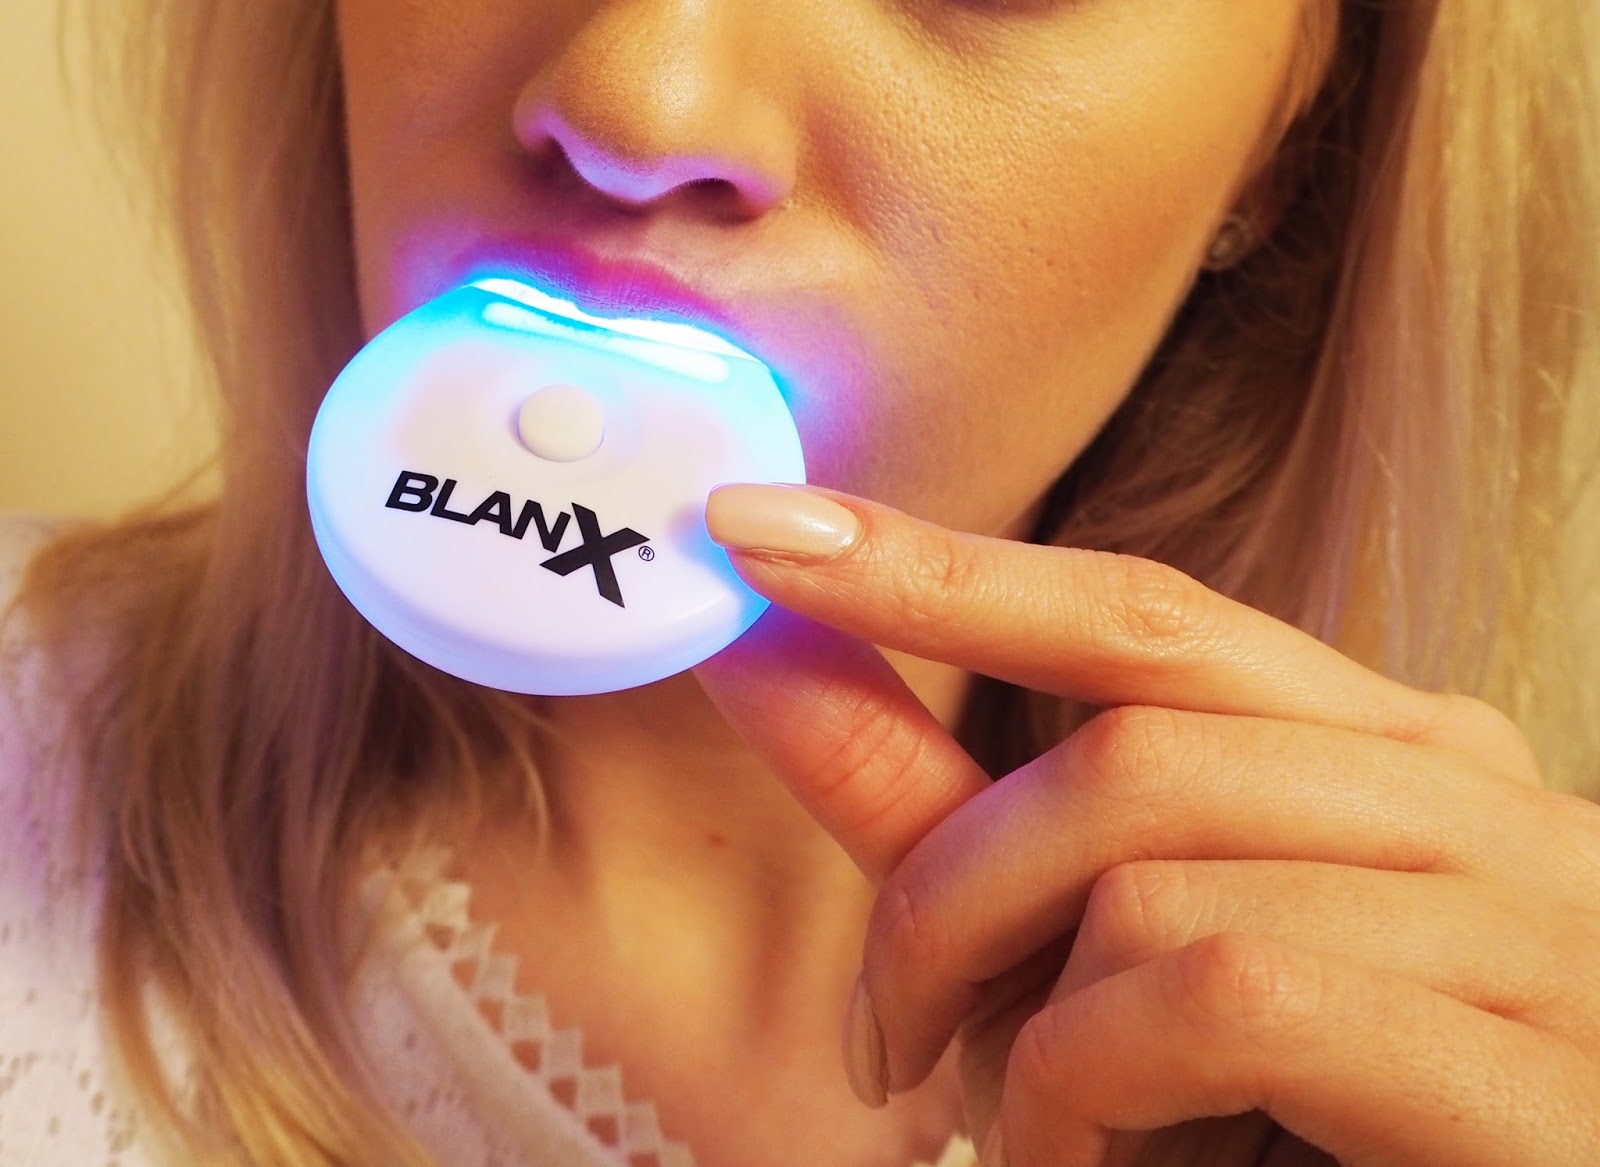 Lighten Up Your Smile with Blanx Teeth Whitening, Katie Kirk Love, Teeth Whitening, UK Blogger, Non Abrasive Teeth Whitening, Peroxide Free, Blanx Toothpaste, Beauty Blogger